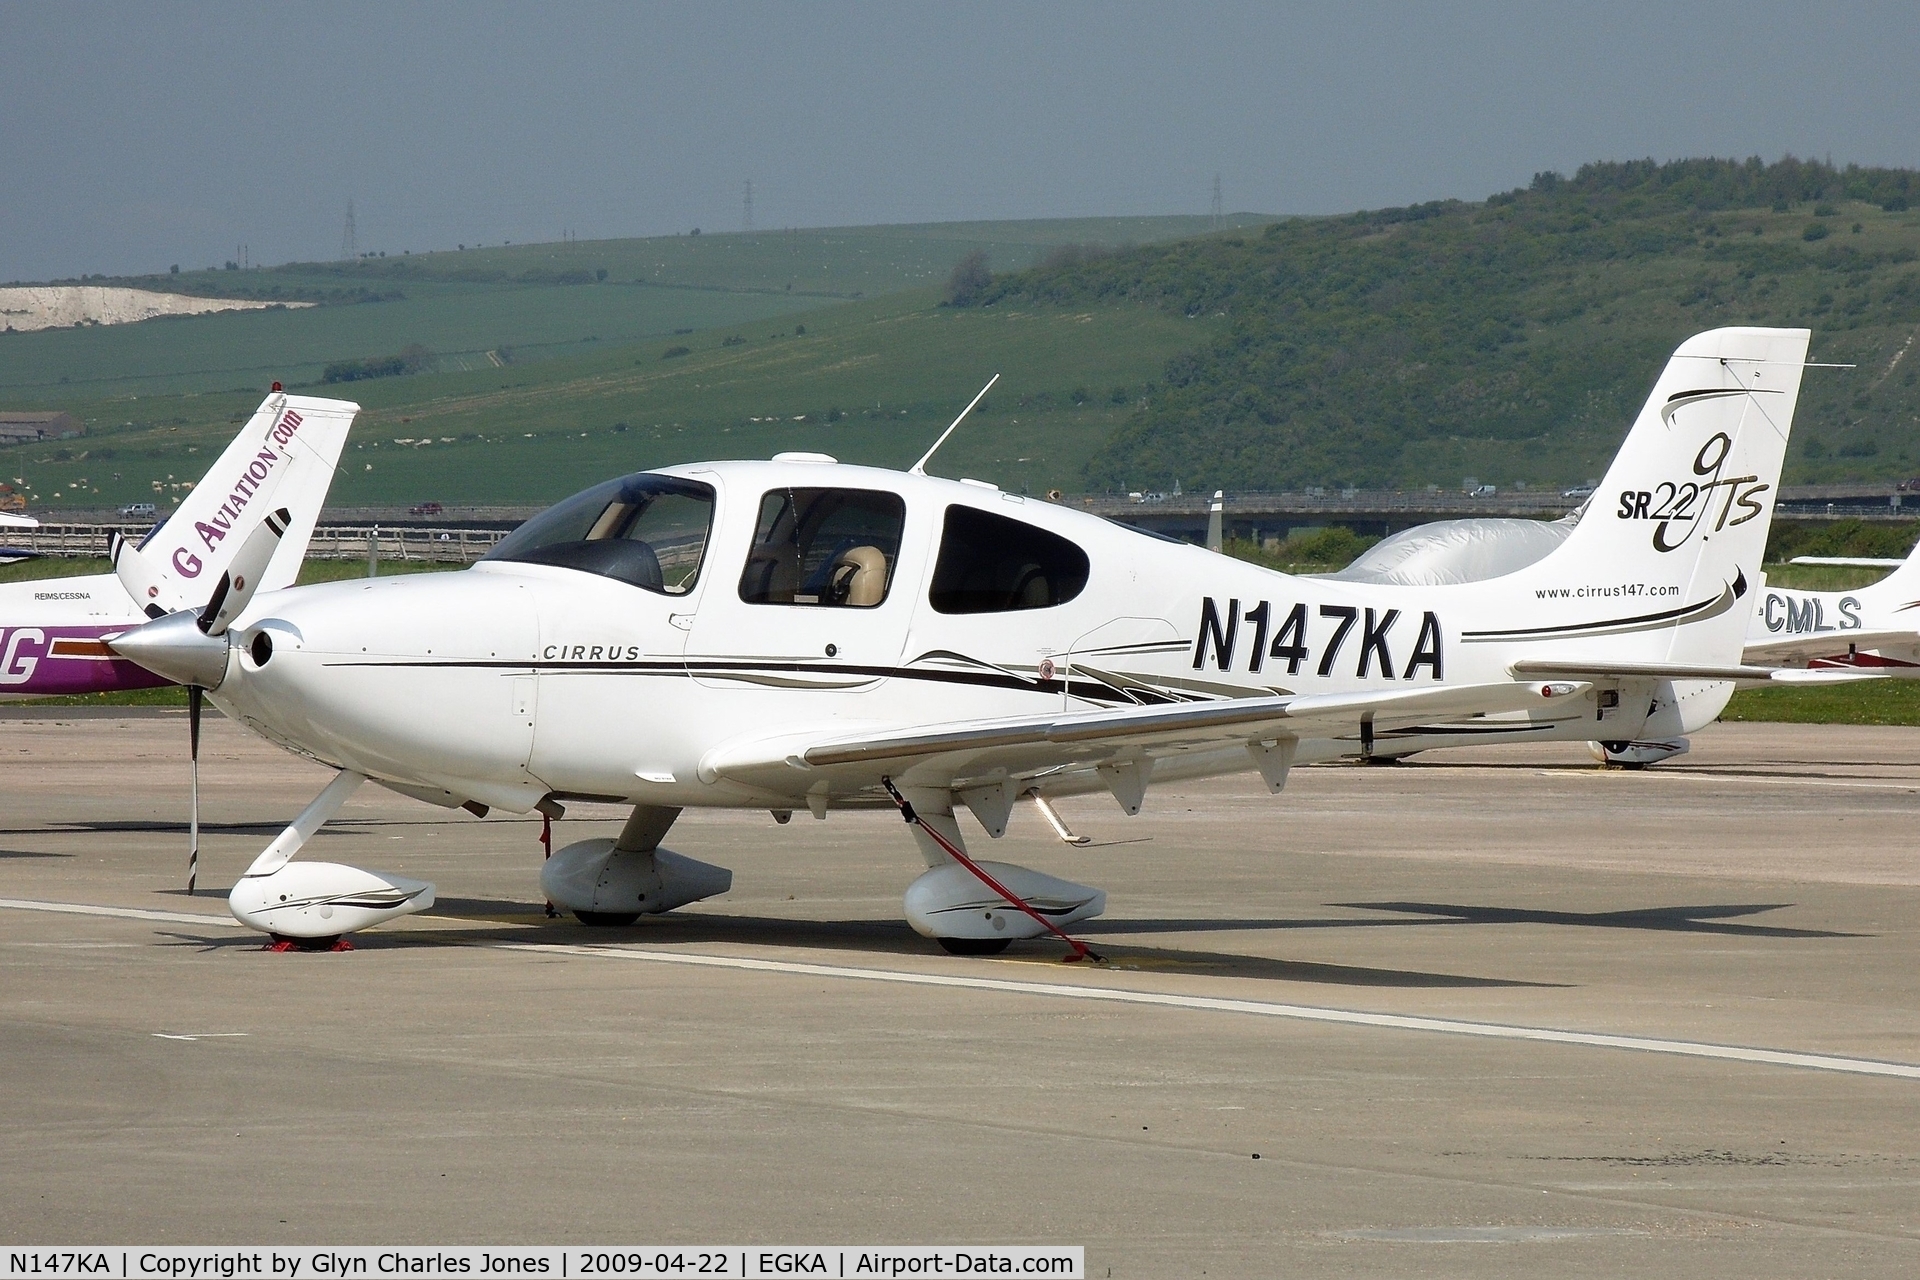 N147KA, 2006 Cirrus SR22 GTS C/N 1944, Previously N174SR. Owned by Free Flight Aviation Inc Trustee.